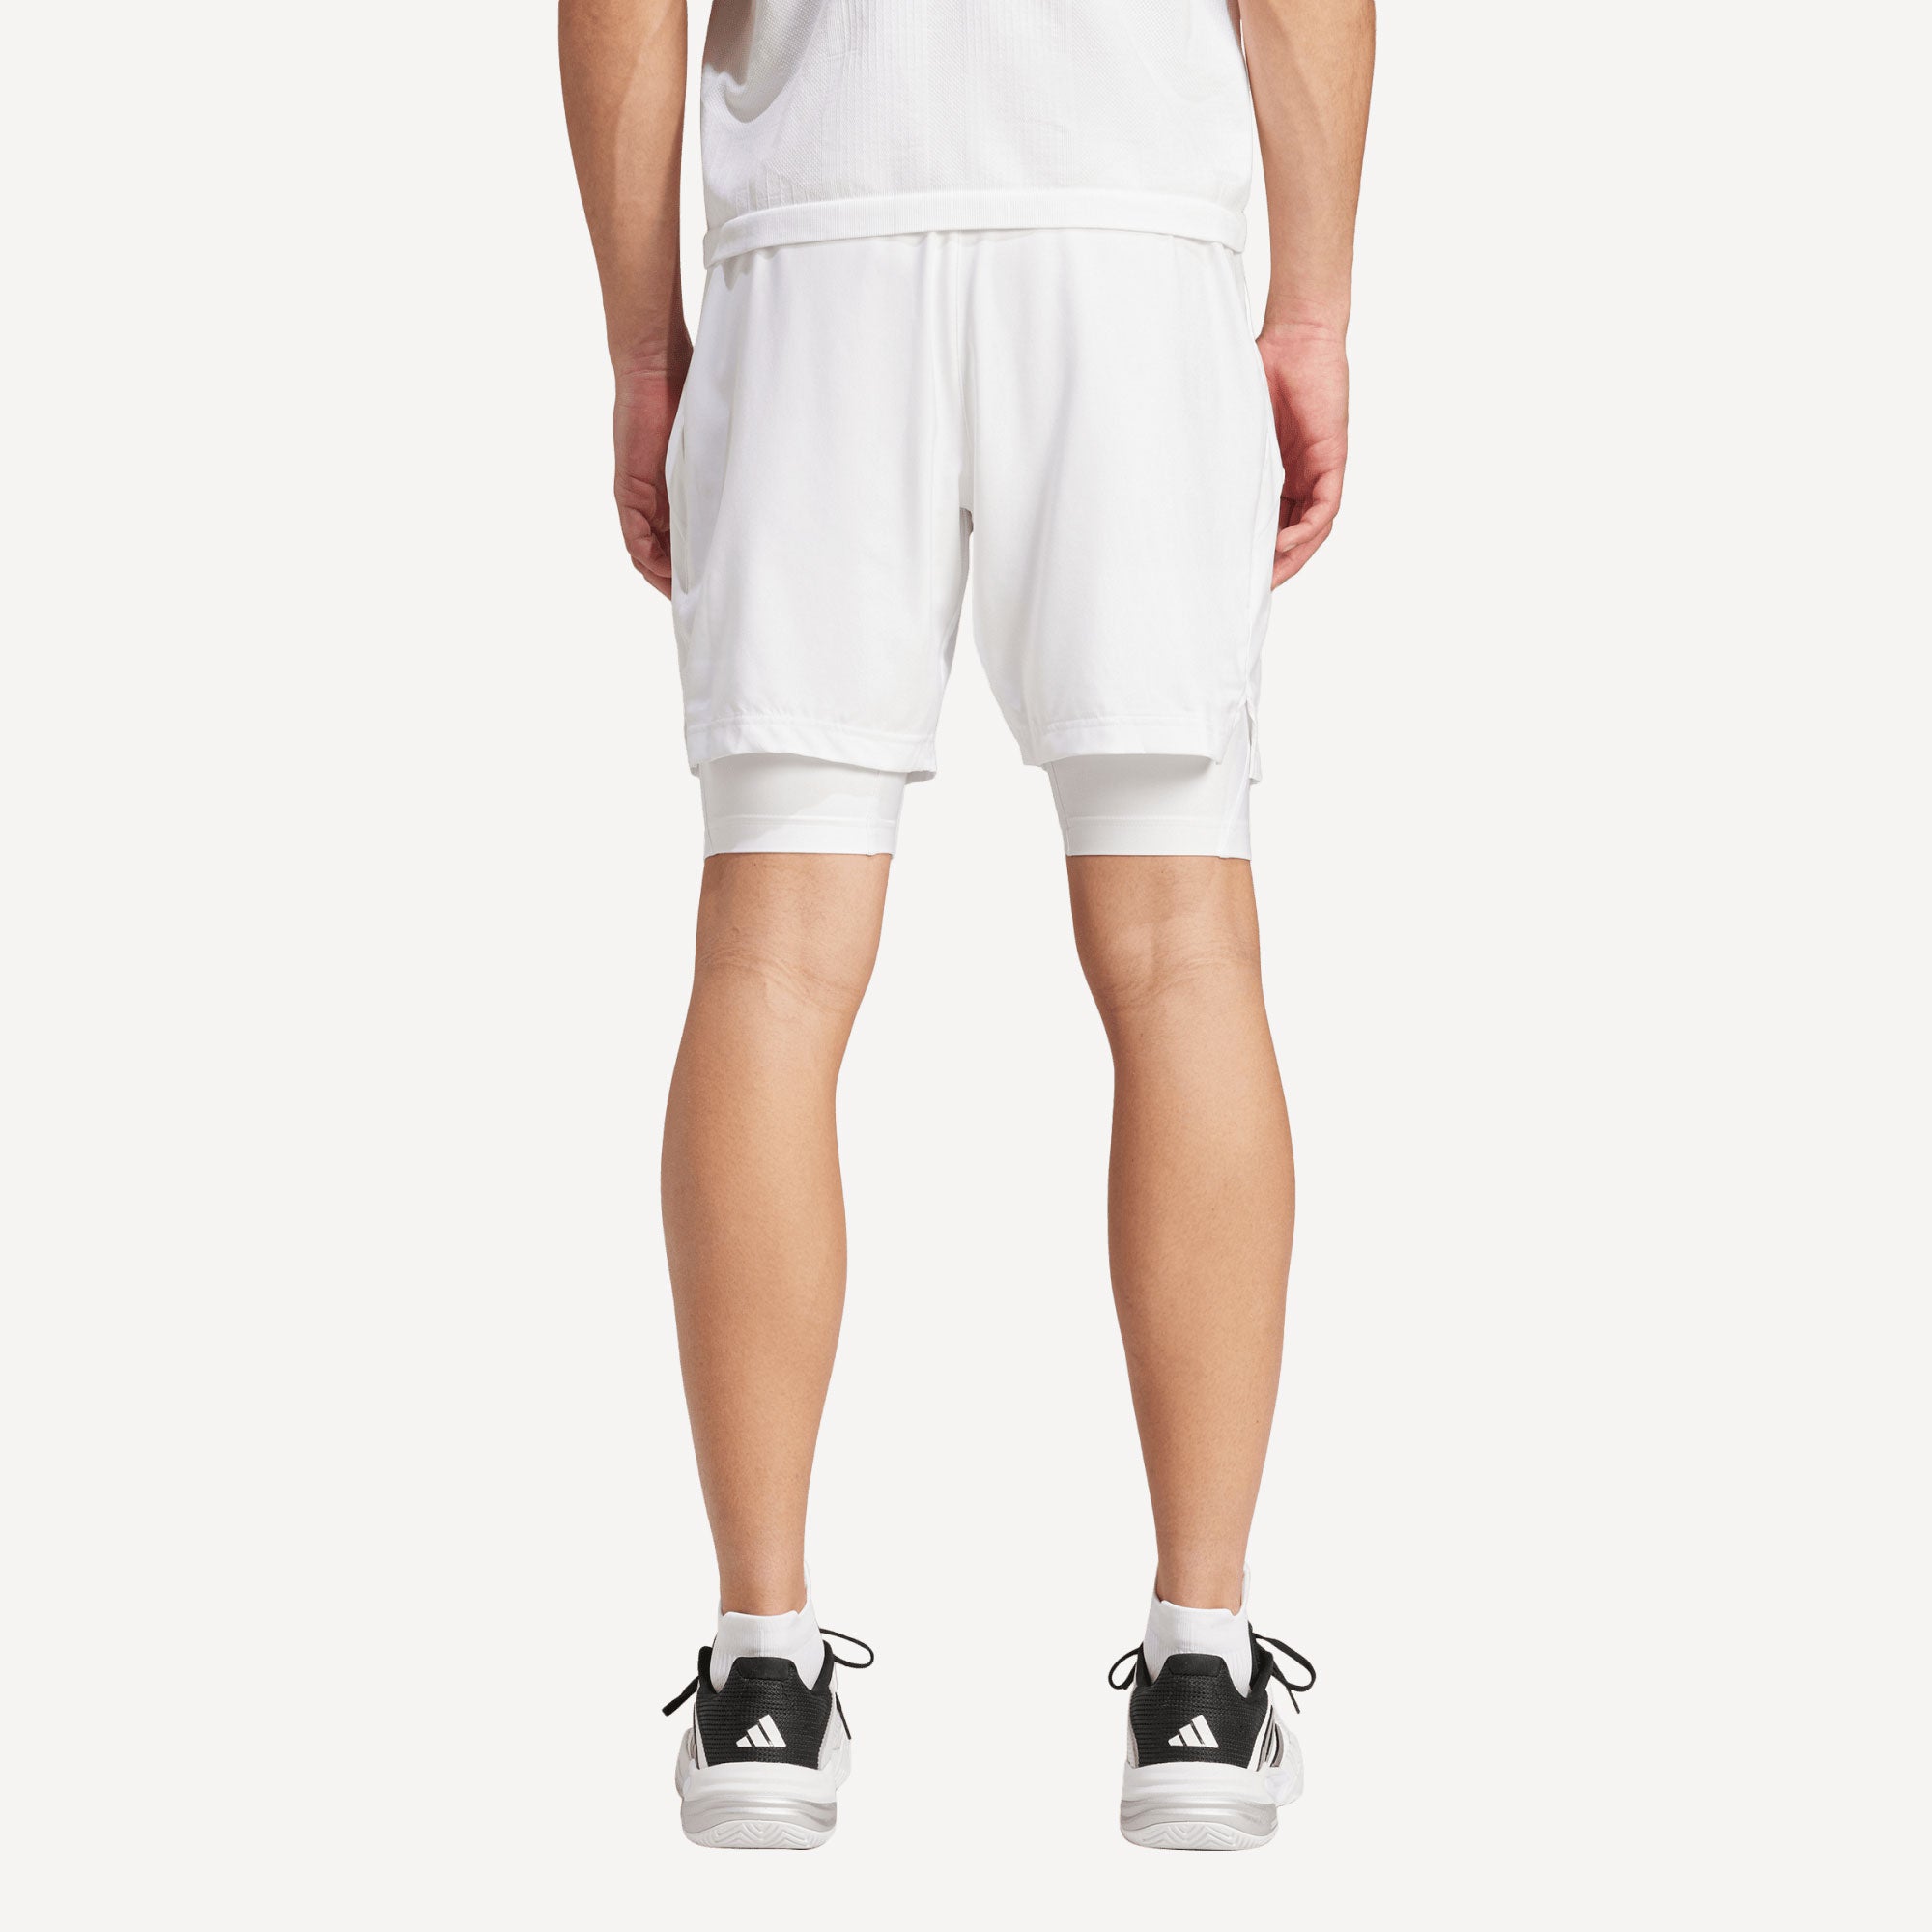 adidas Pro London Men's Tennis Shorts and Inner Shorts Set - White (2)